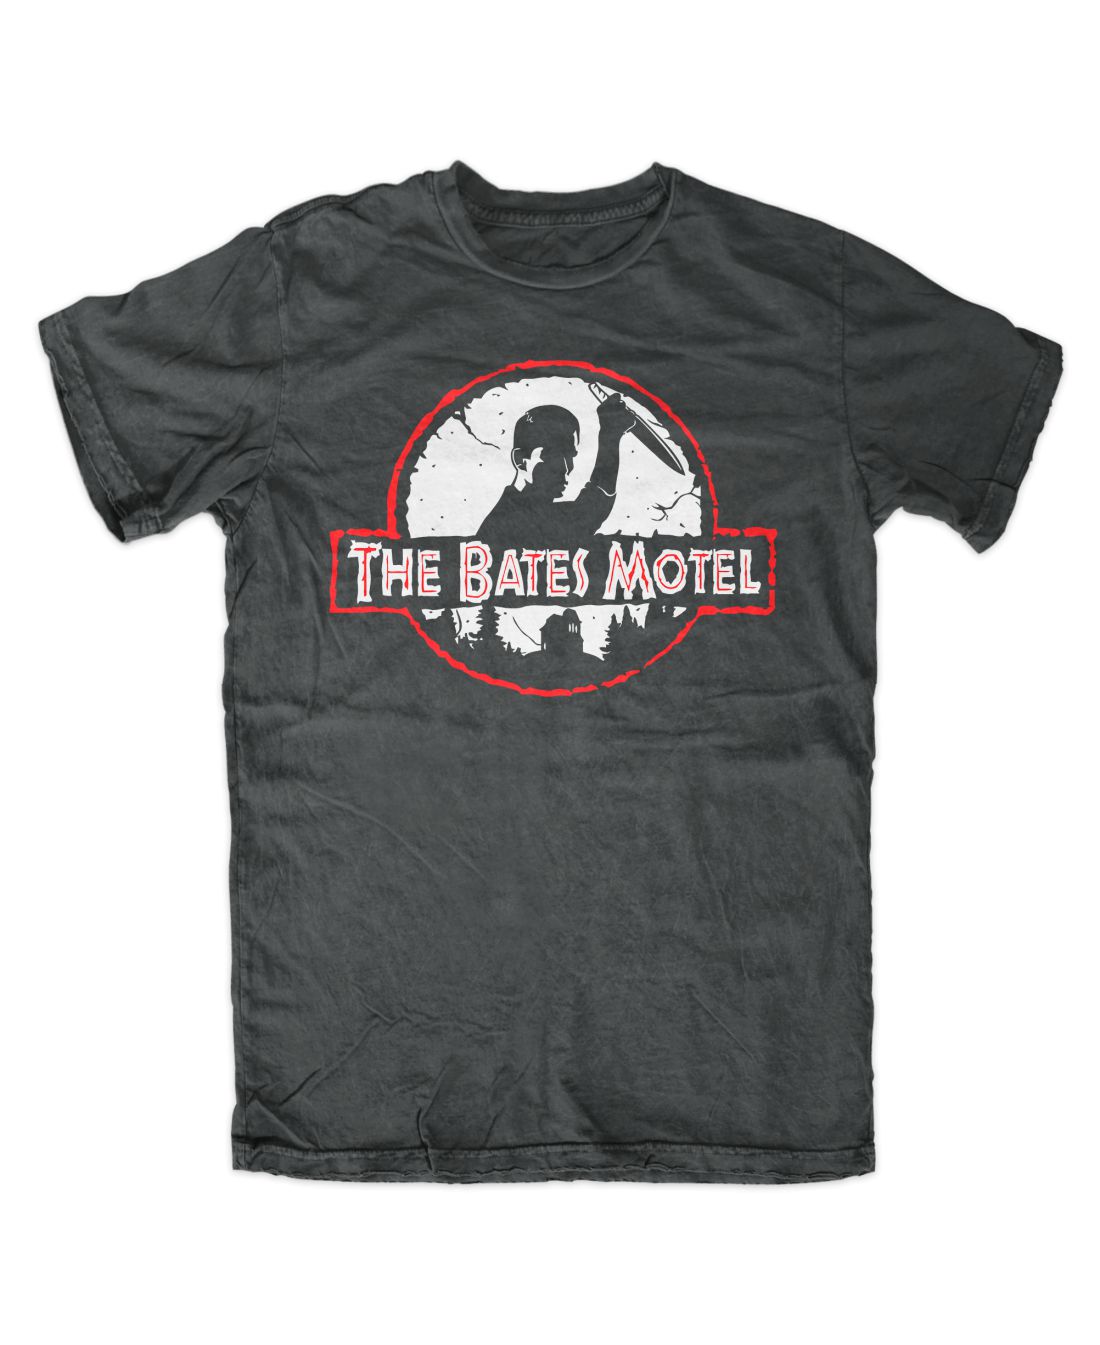 The Bates Motel (charcoal póló)